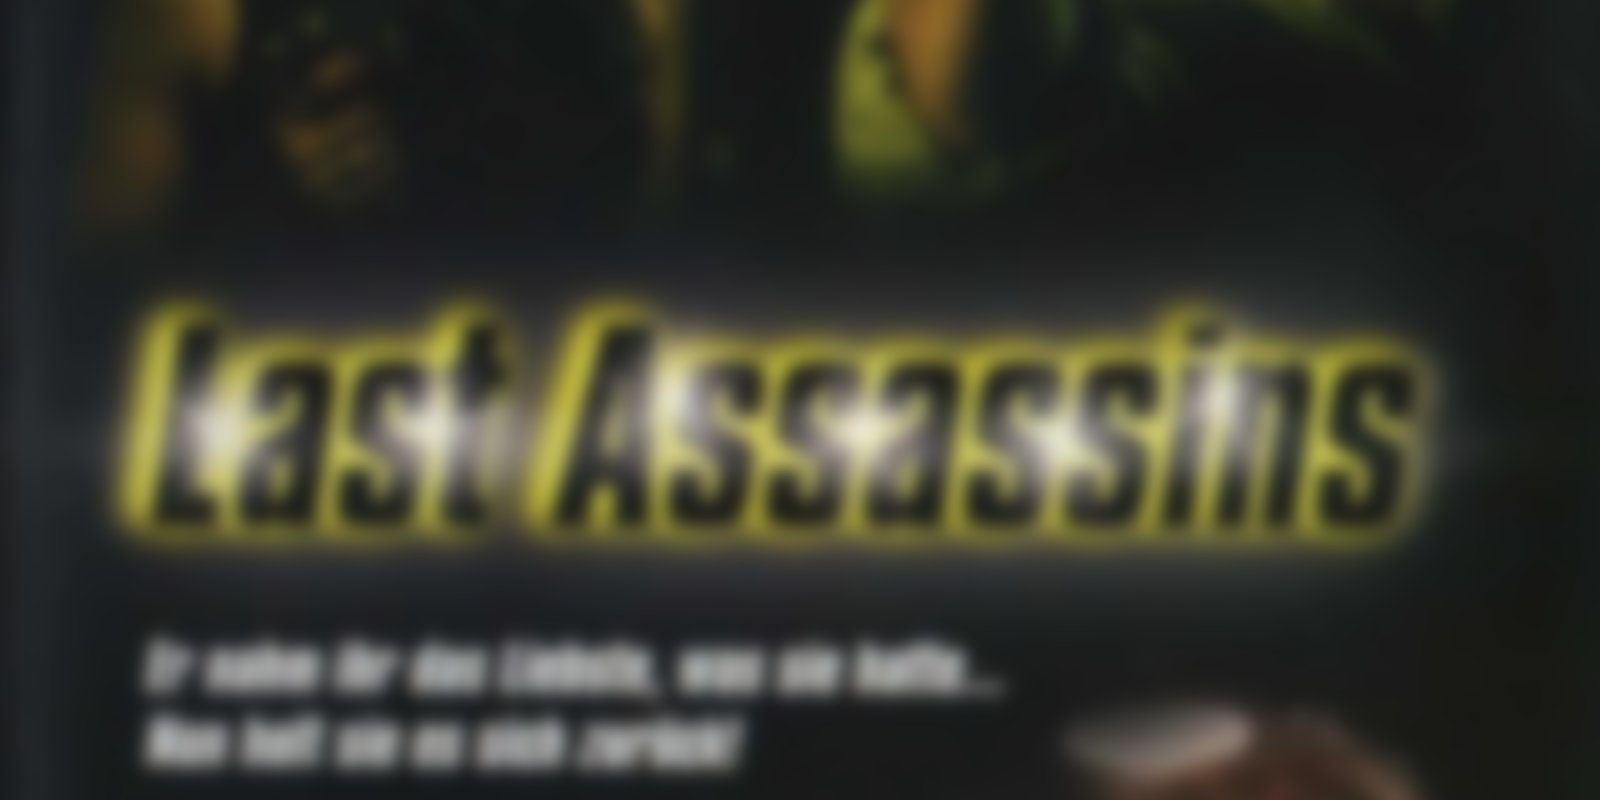 Last Assassins